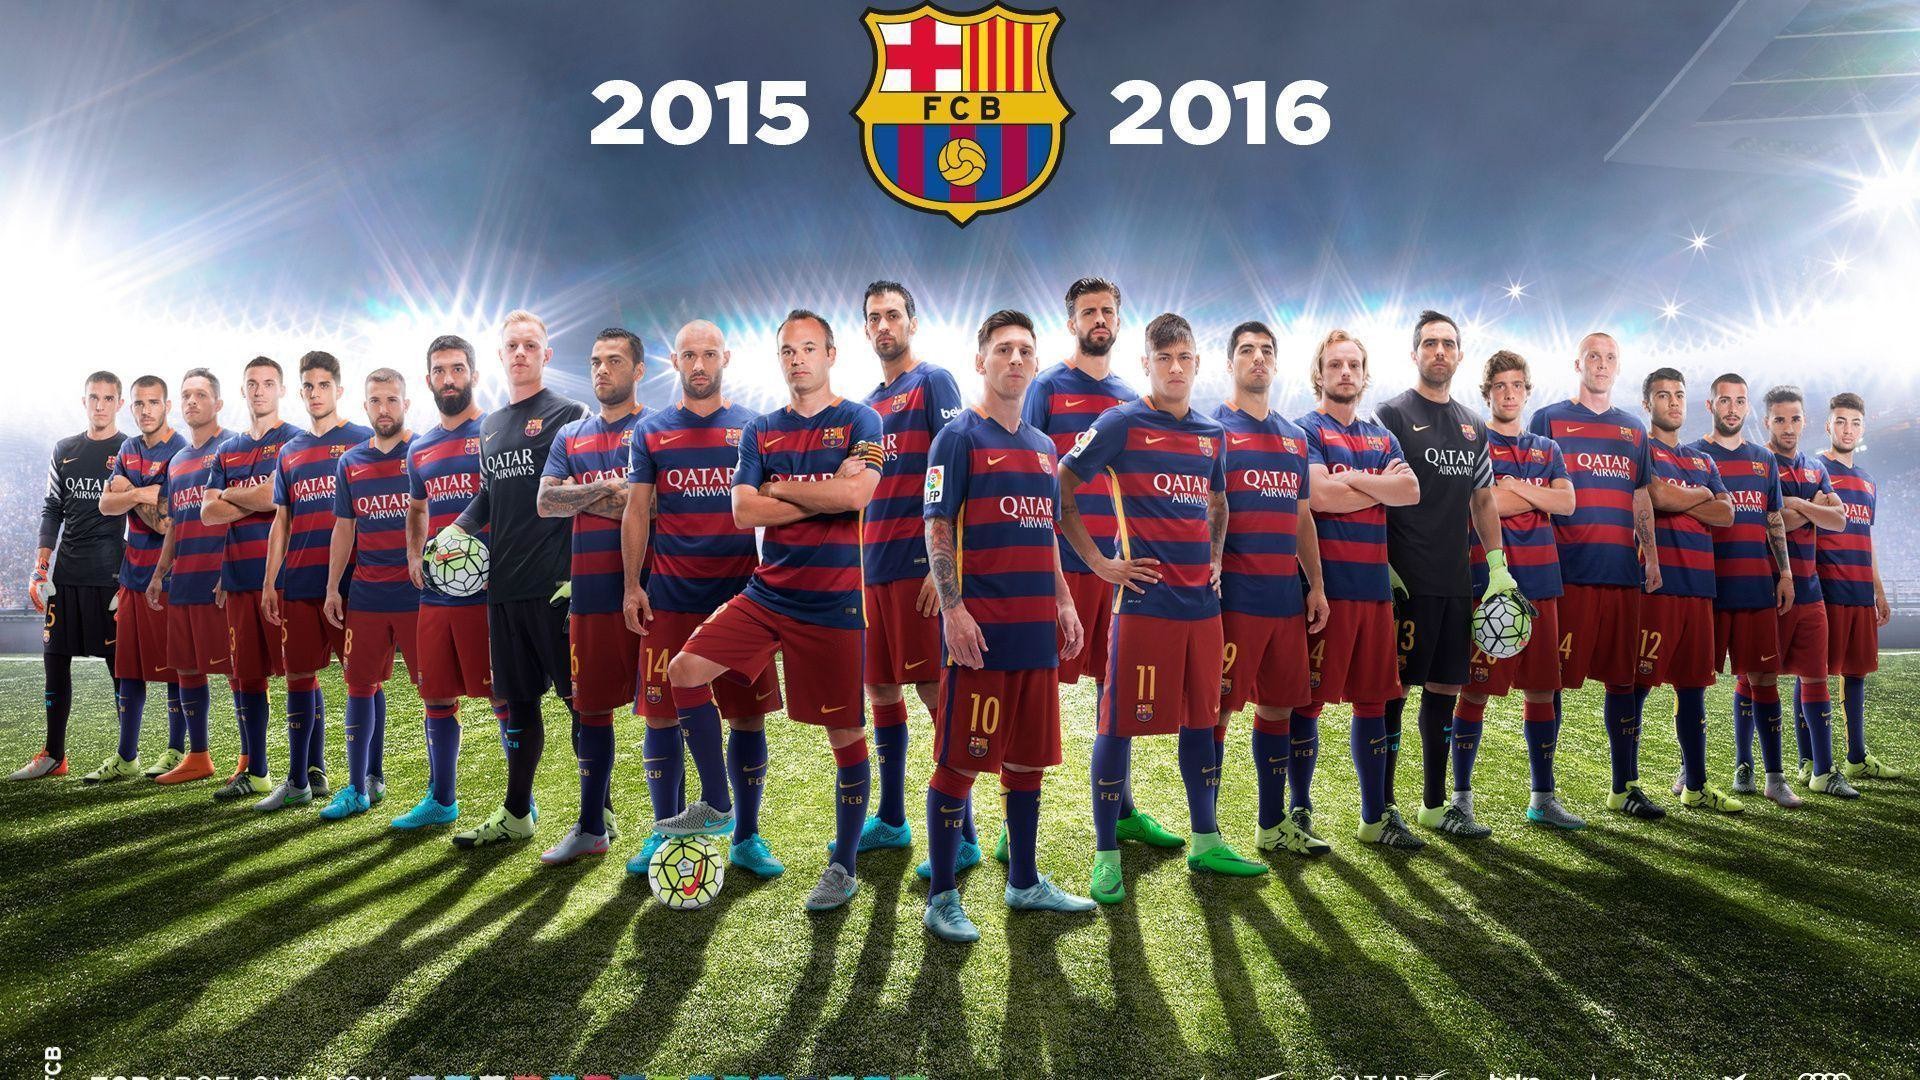 1920x1080  2015, 2016, Football, Soccer, Fcb, Fc Barcelona .